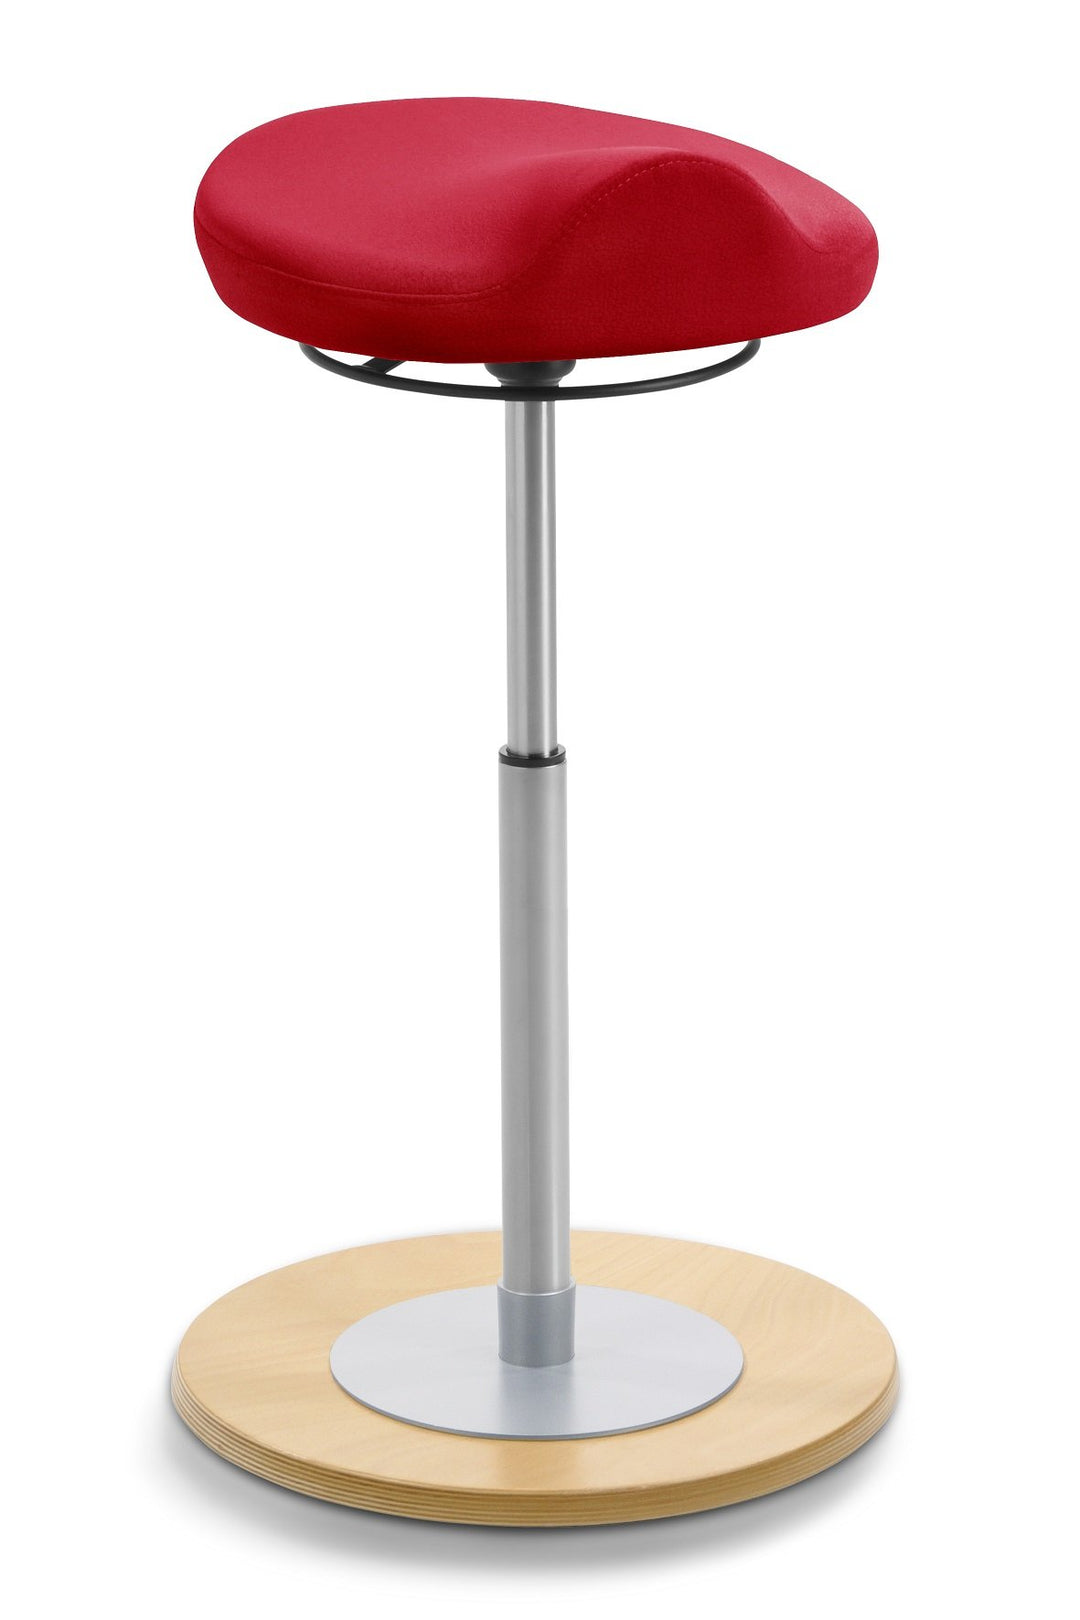 Mayer MyErgosit Taboret Krzesło Stołek balansujący 3D 54-79cm podstawa sklejka naturalna 1101 N